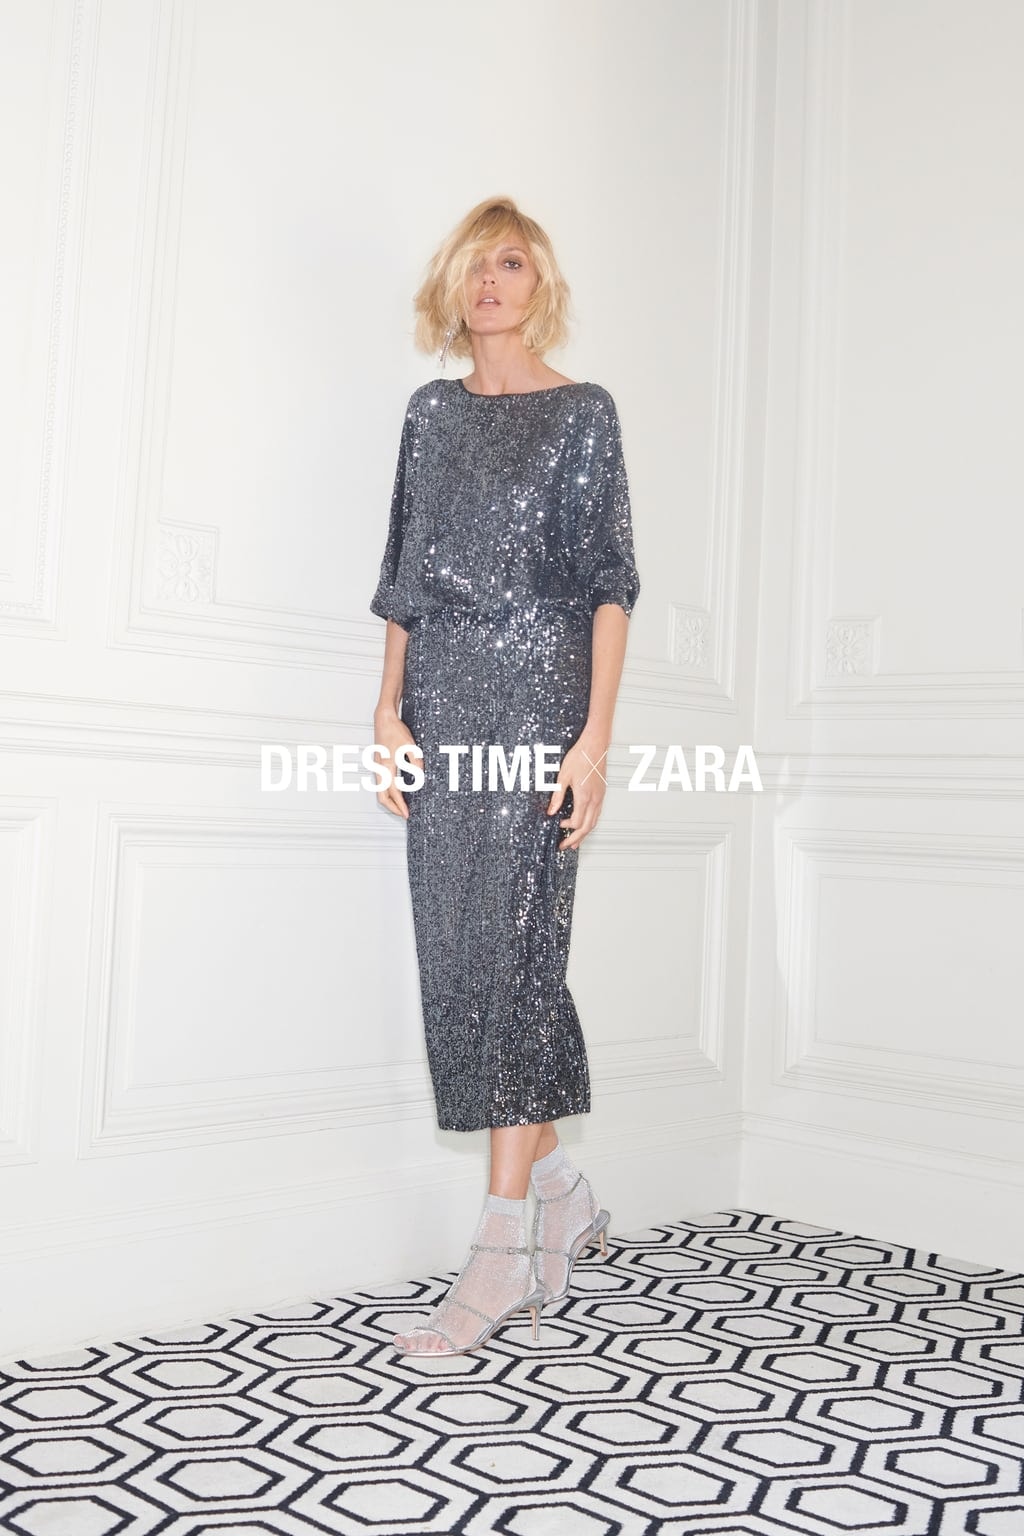 Zara Open Back Sequin Dress